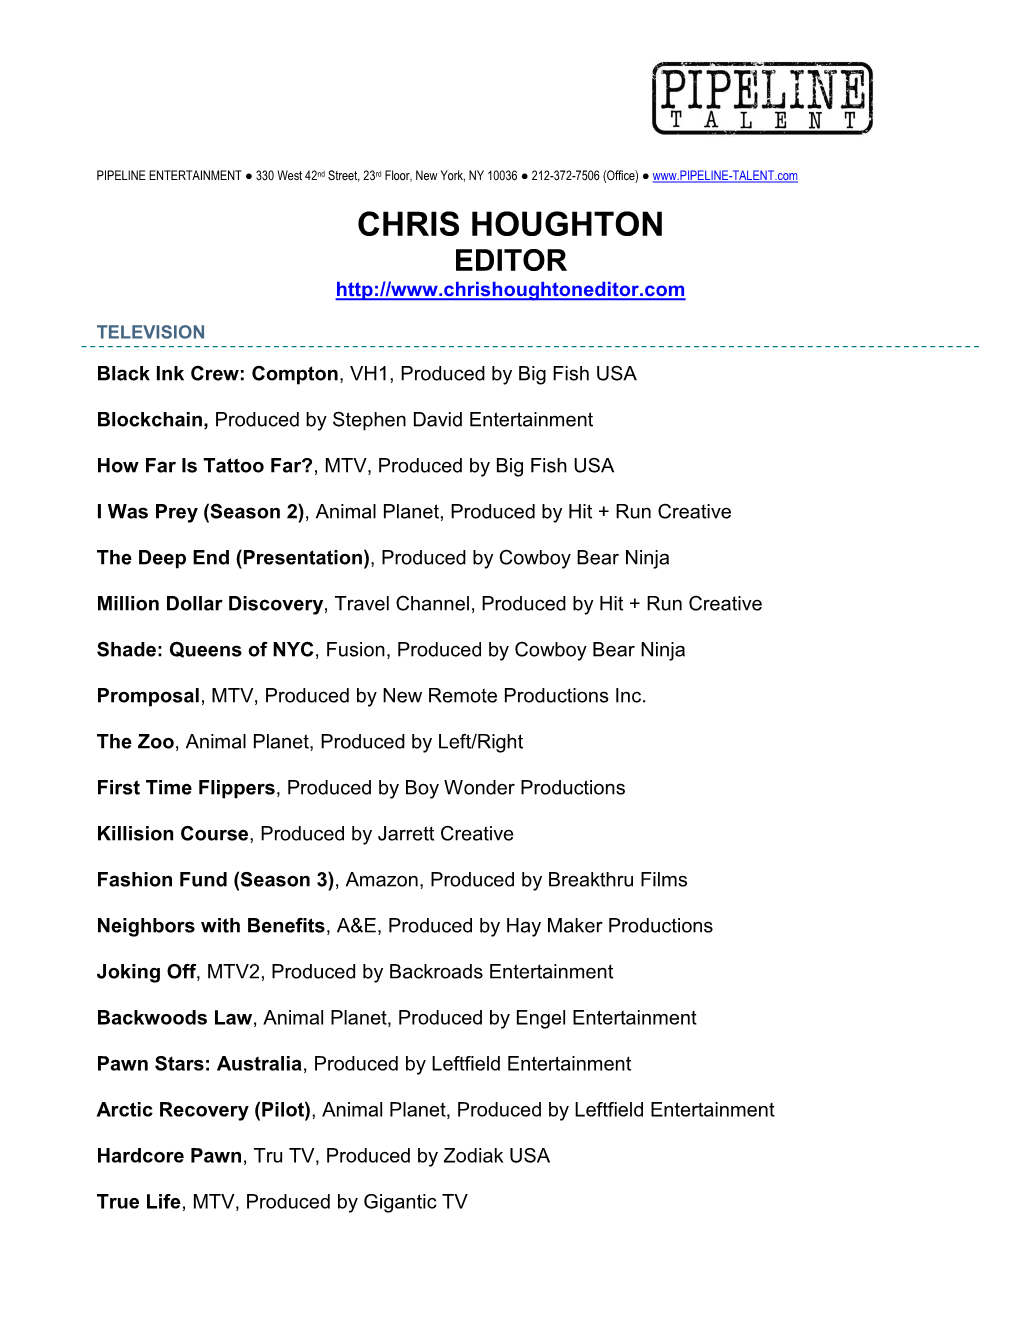 Chris Houghton Editor